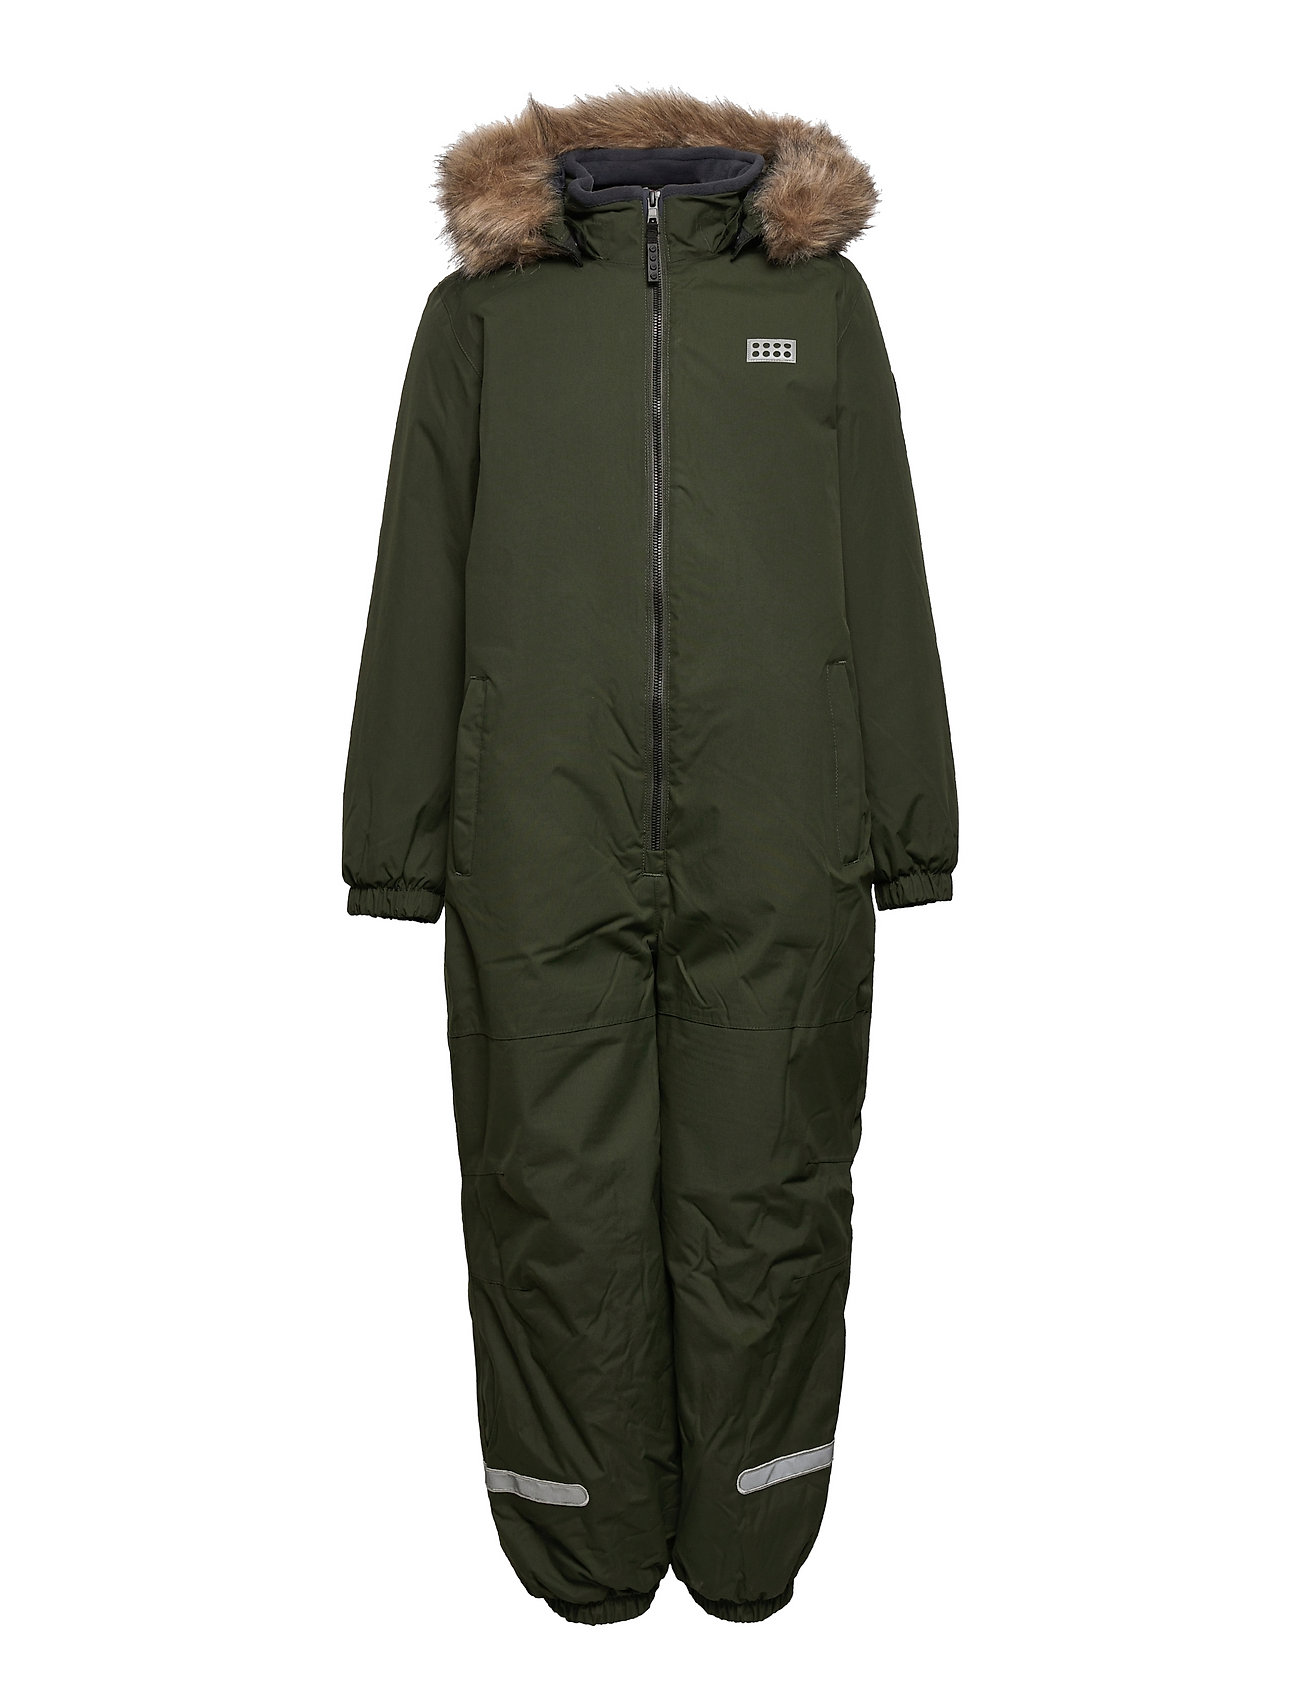 Lwjori 750 - Snowsuit Outerwear Snow/ski Clothing Snow/ski Suits & Sets Vihreä Lego Wear, Lego wear